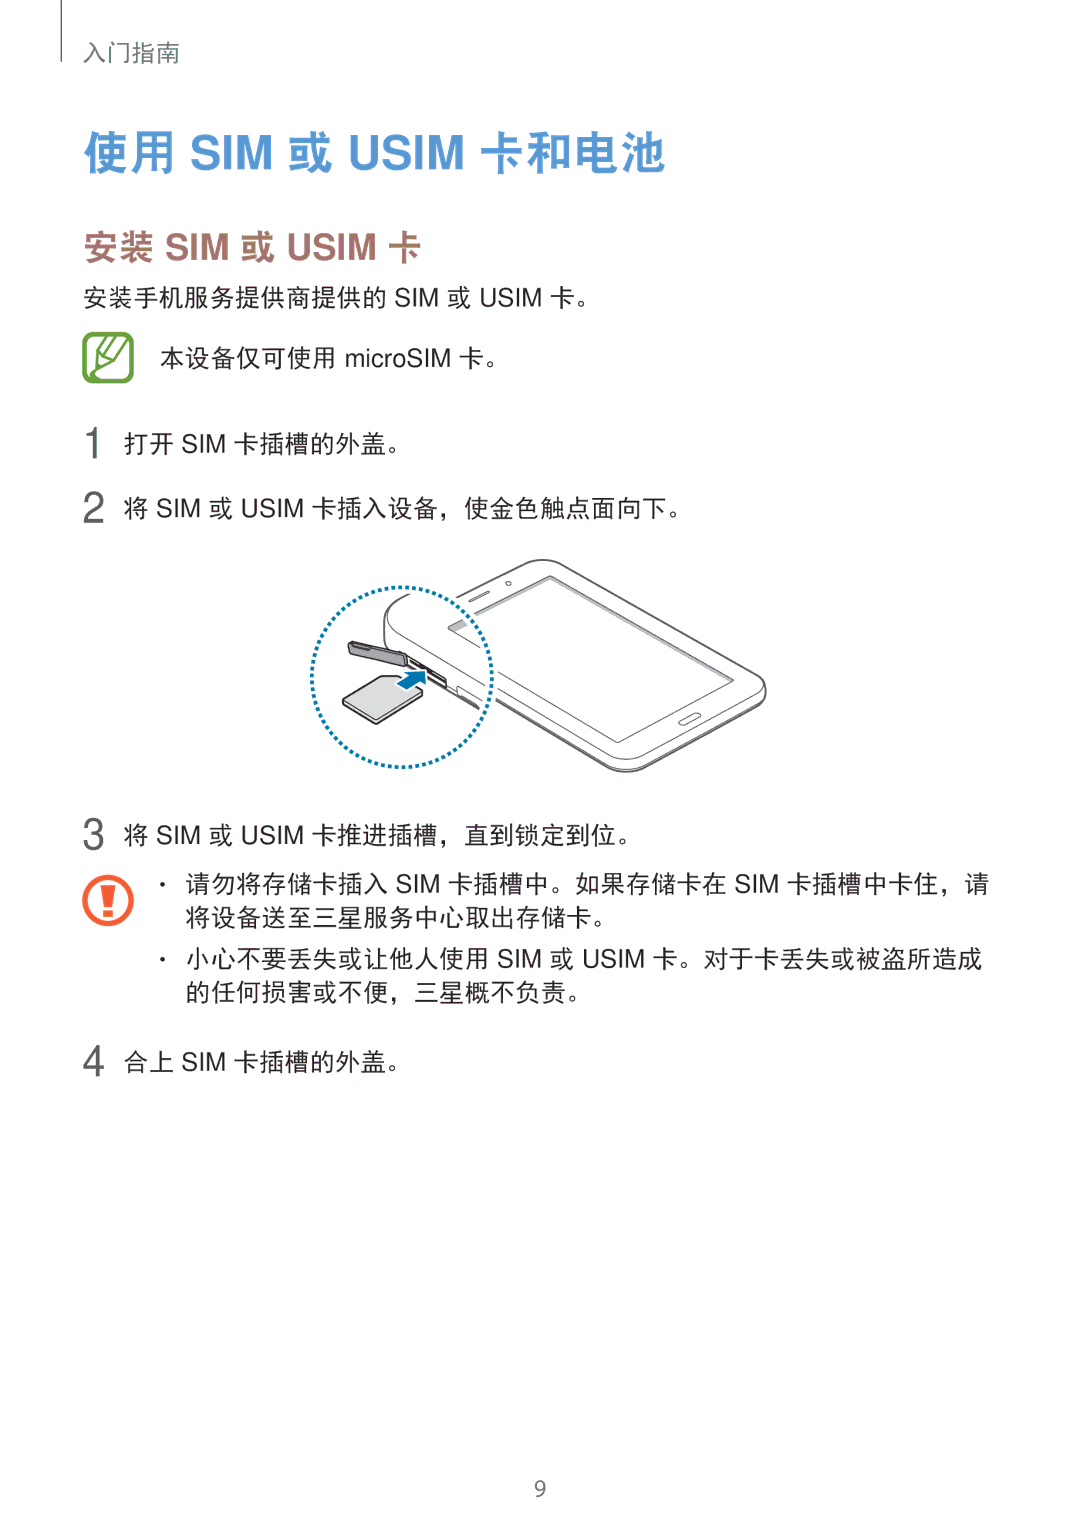 Samsung SM-T116NYKUXXV, SM-T116NDWUXXV manual 使用 SIM 或 Usim 卡和电池, 安装 SIM 或 Usim 卡 